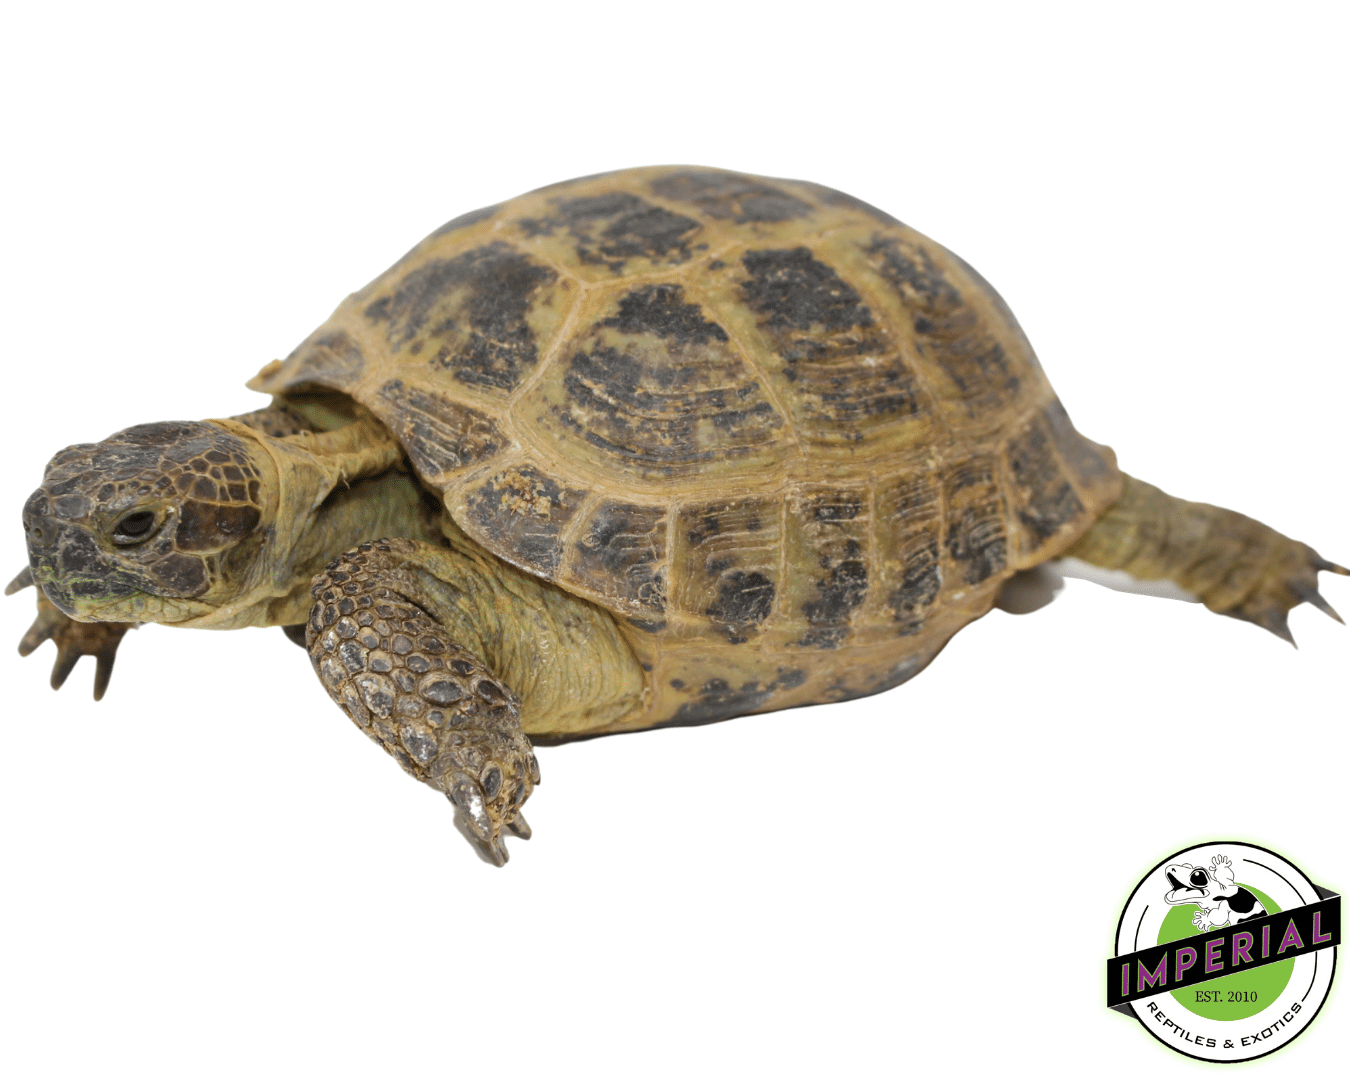 russian tortoise for sale, buy reptiles online